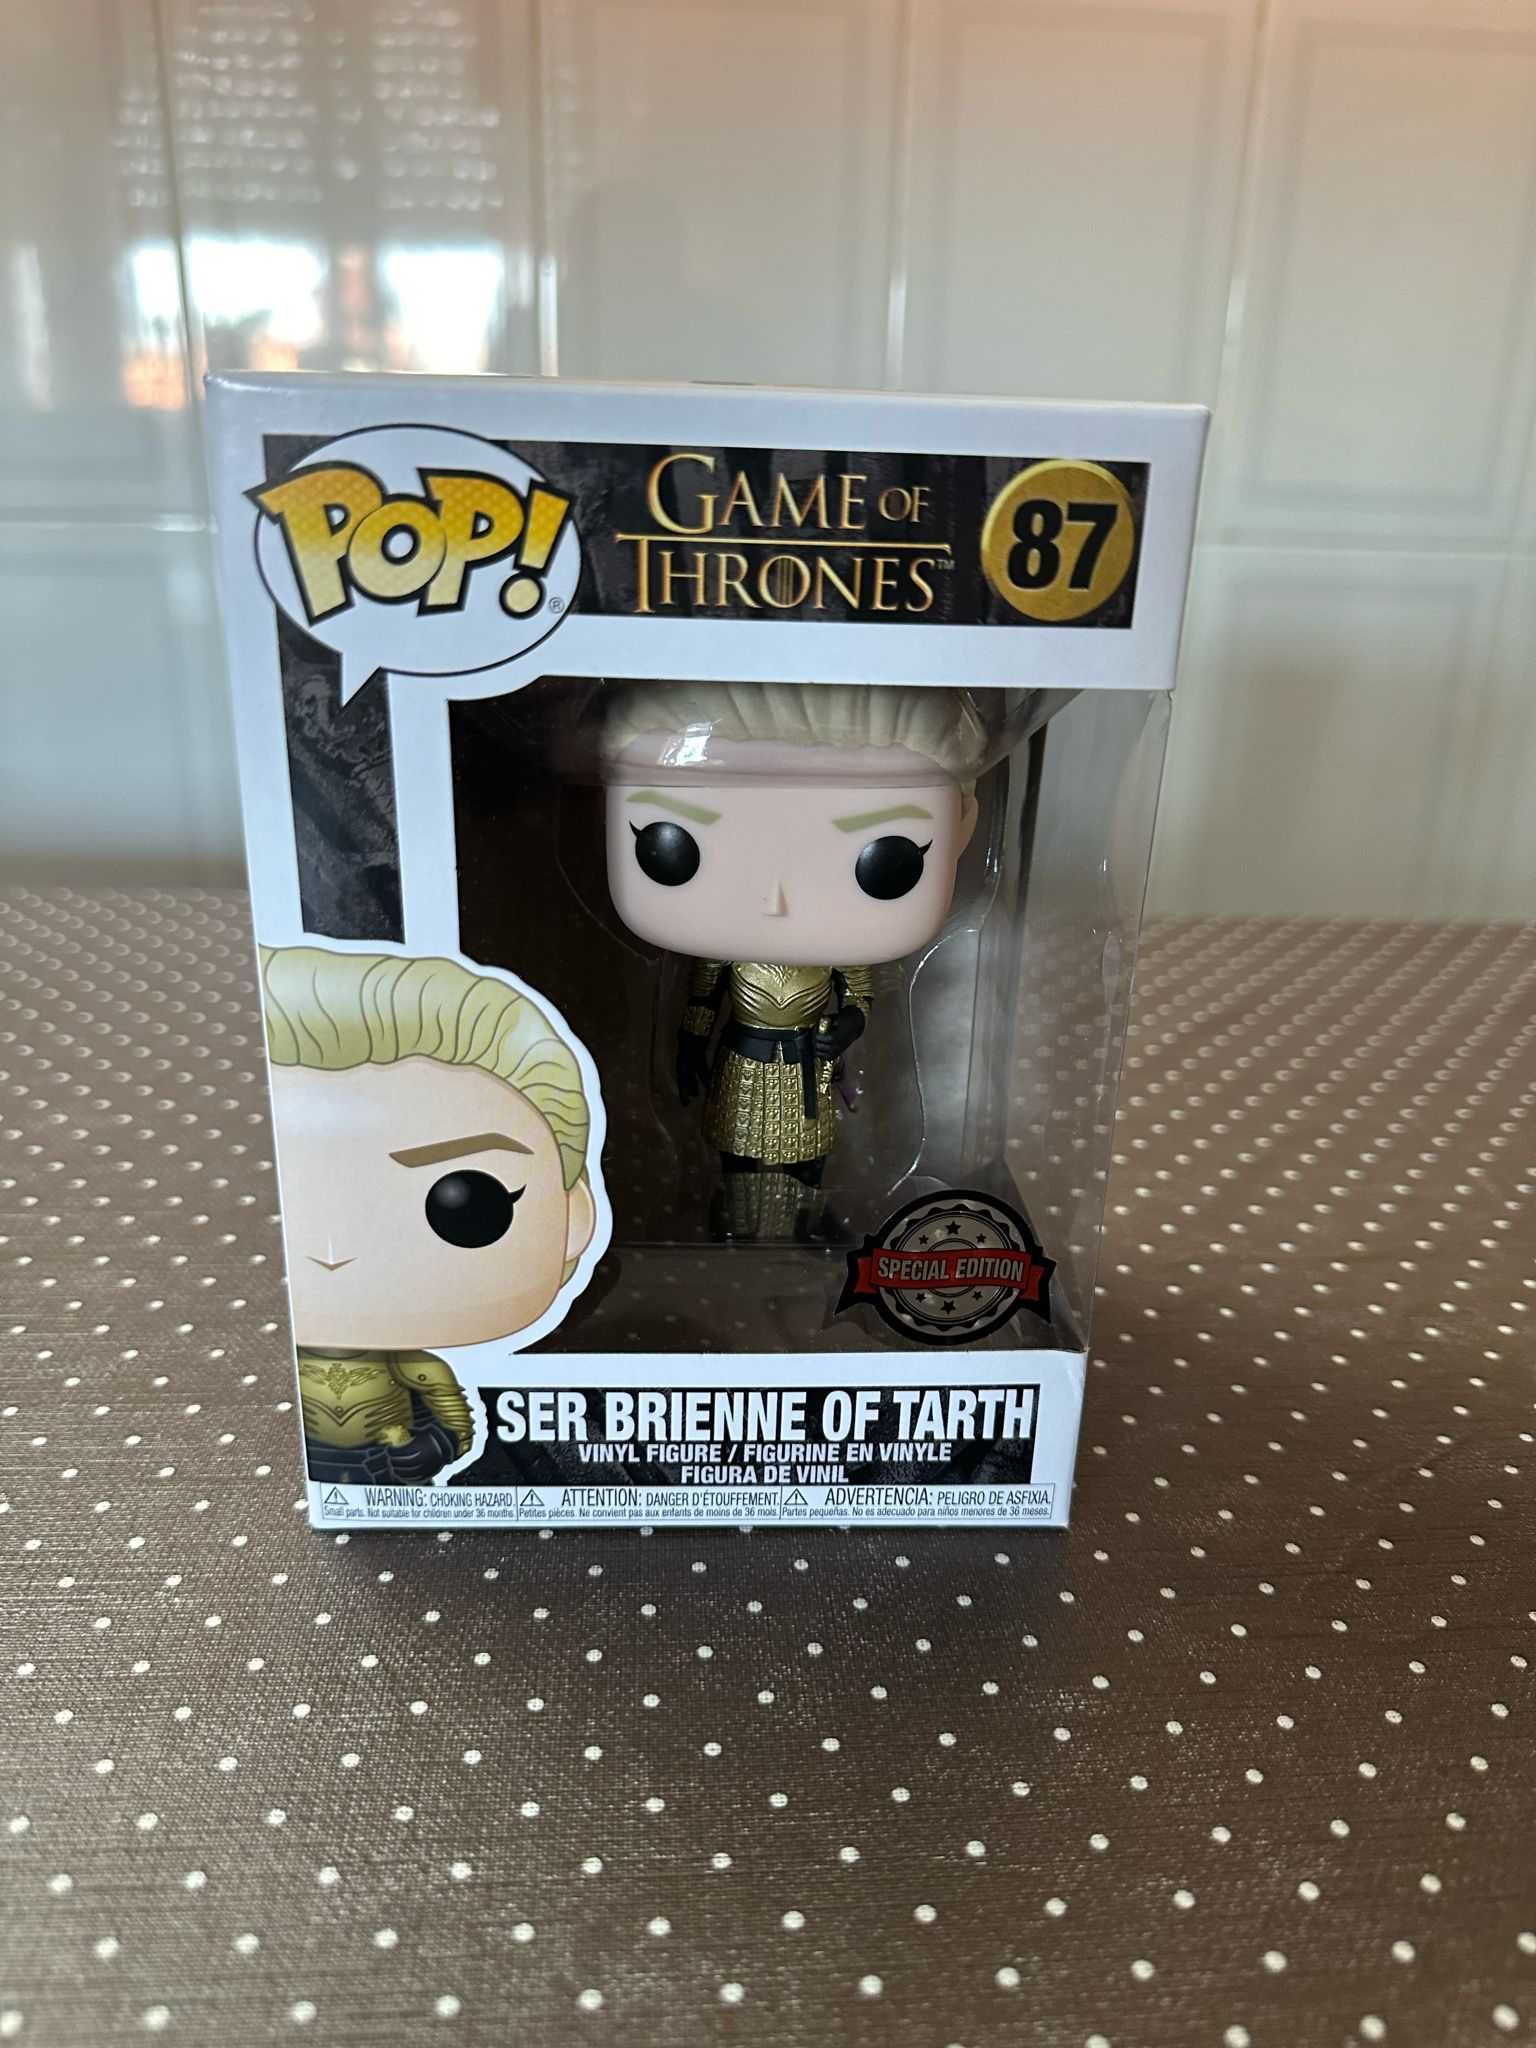 Ser Brienne Of Tarth  - Funko Pop!